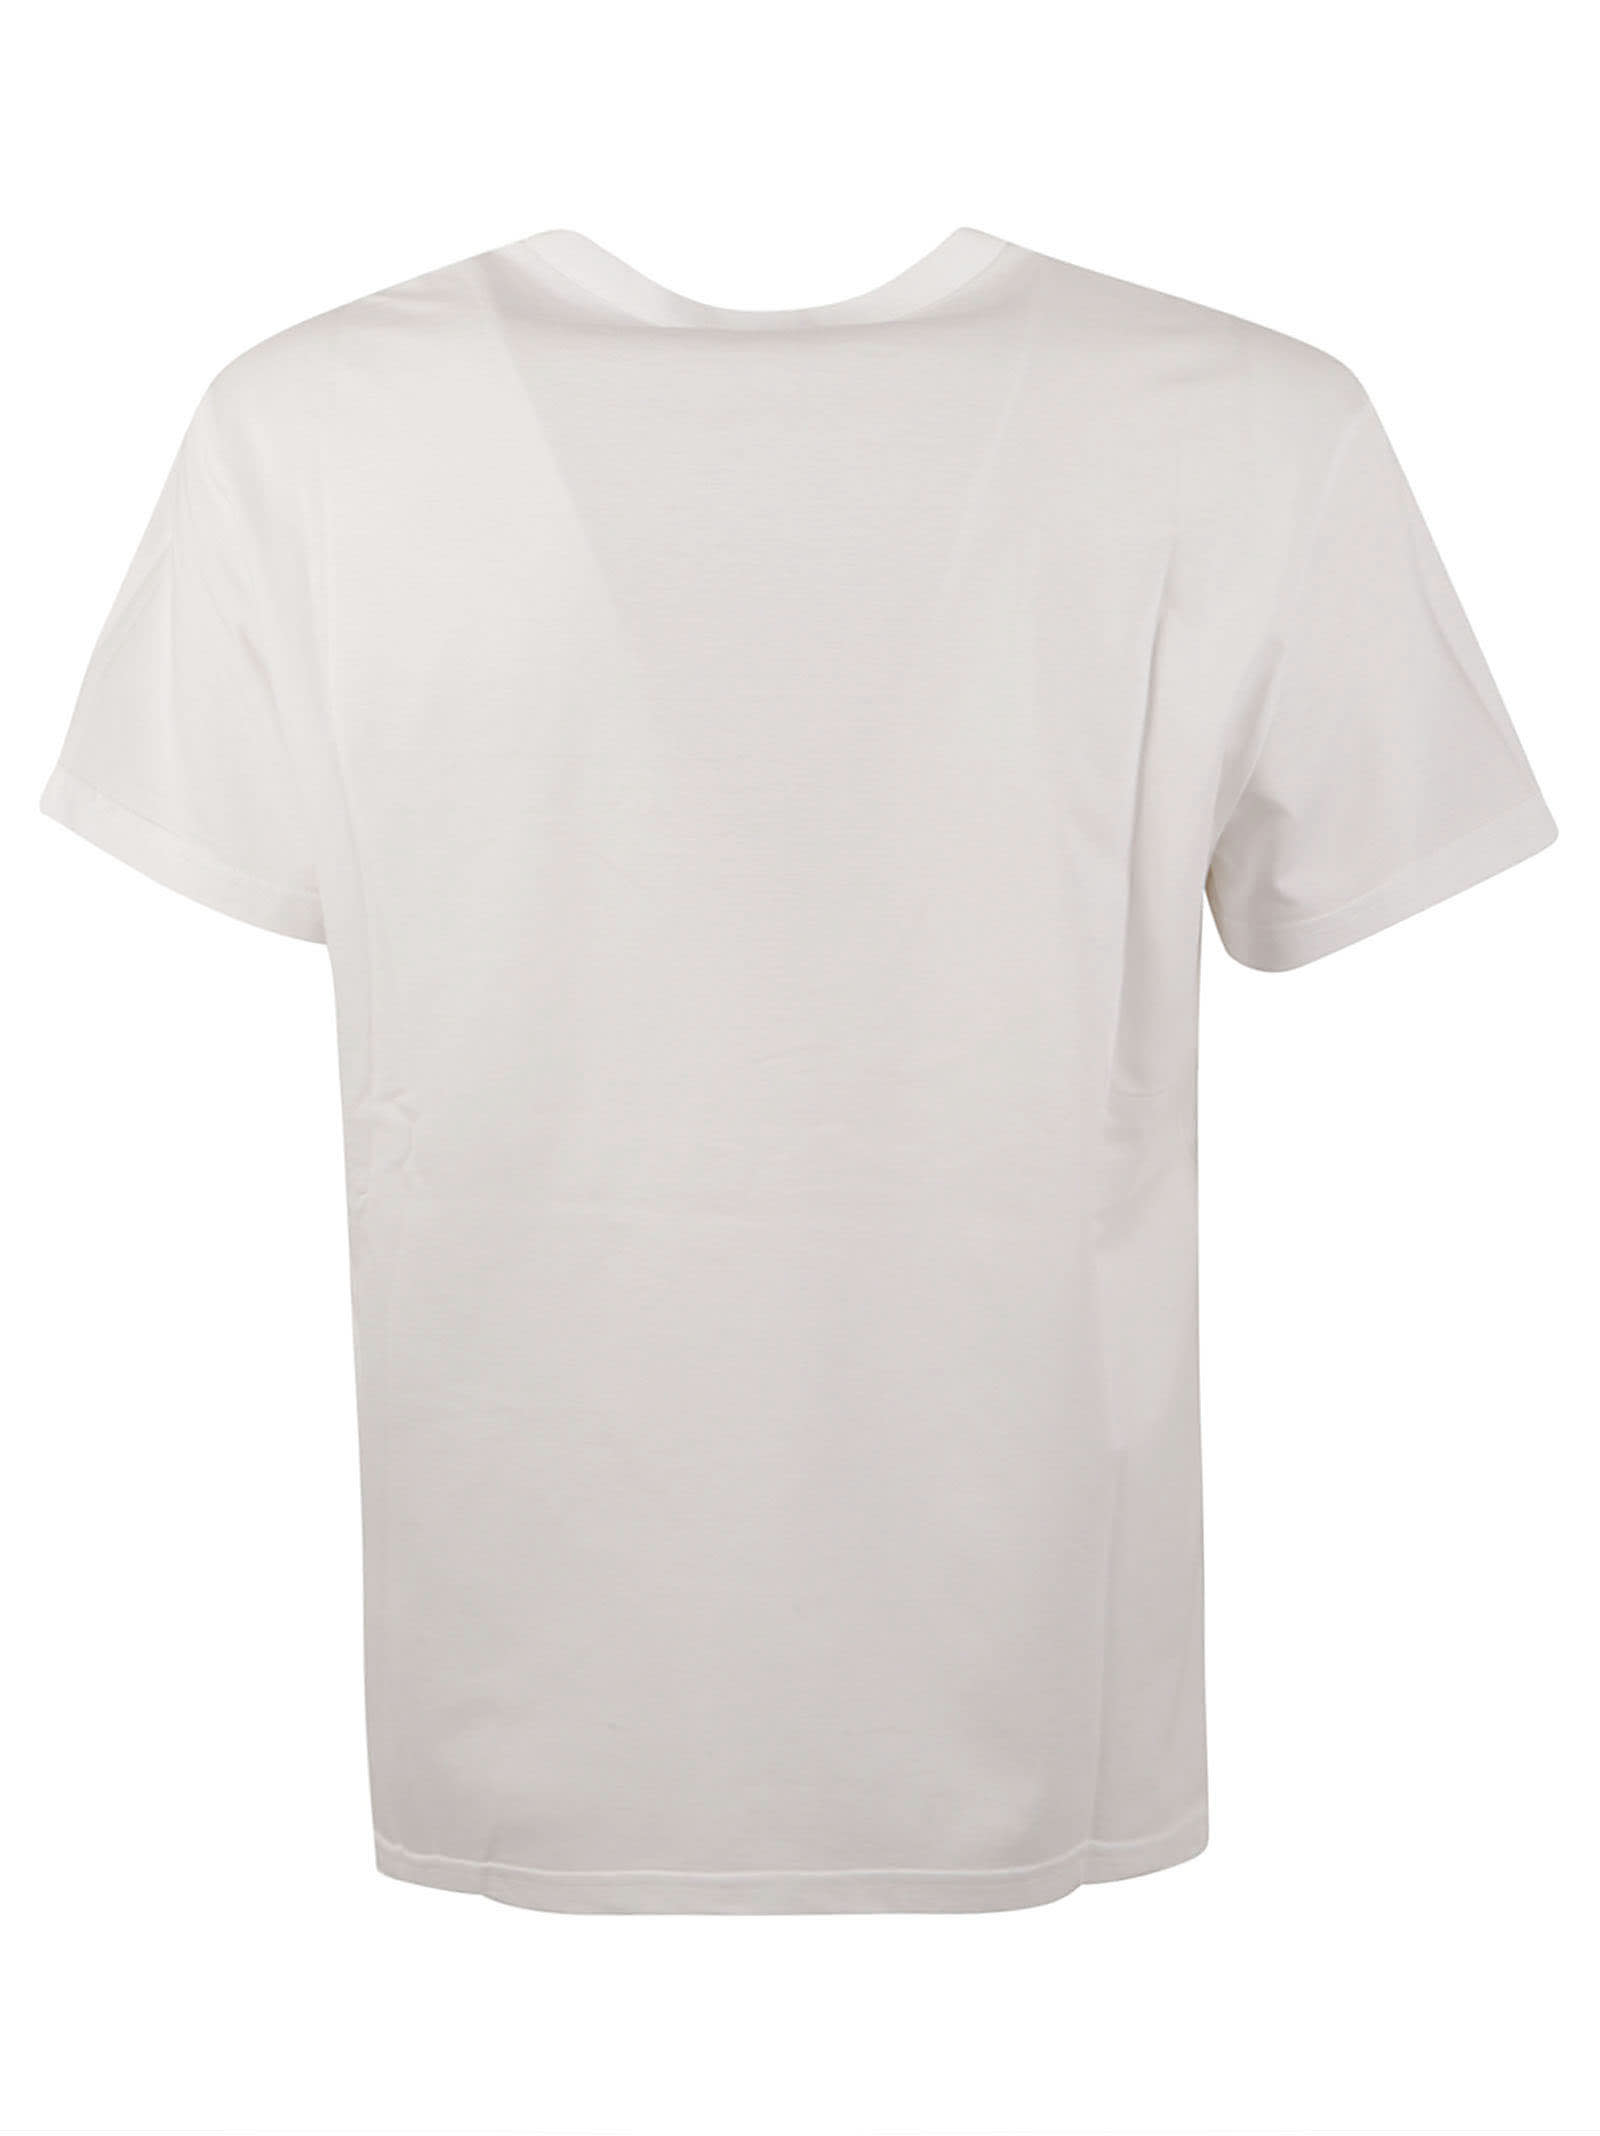 Shop Alexander Mcqueen Dragonfly Logo T-shirt In White/black